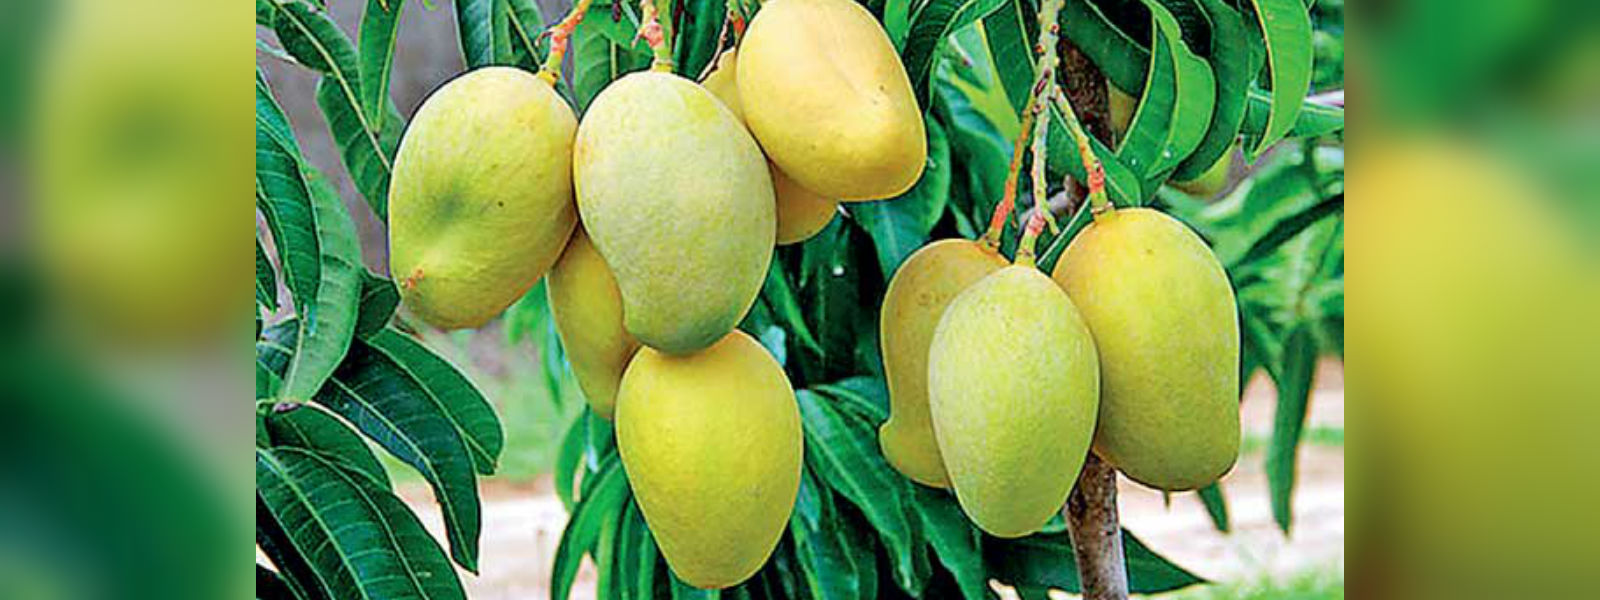 New mango variety discovered